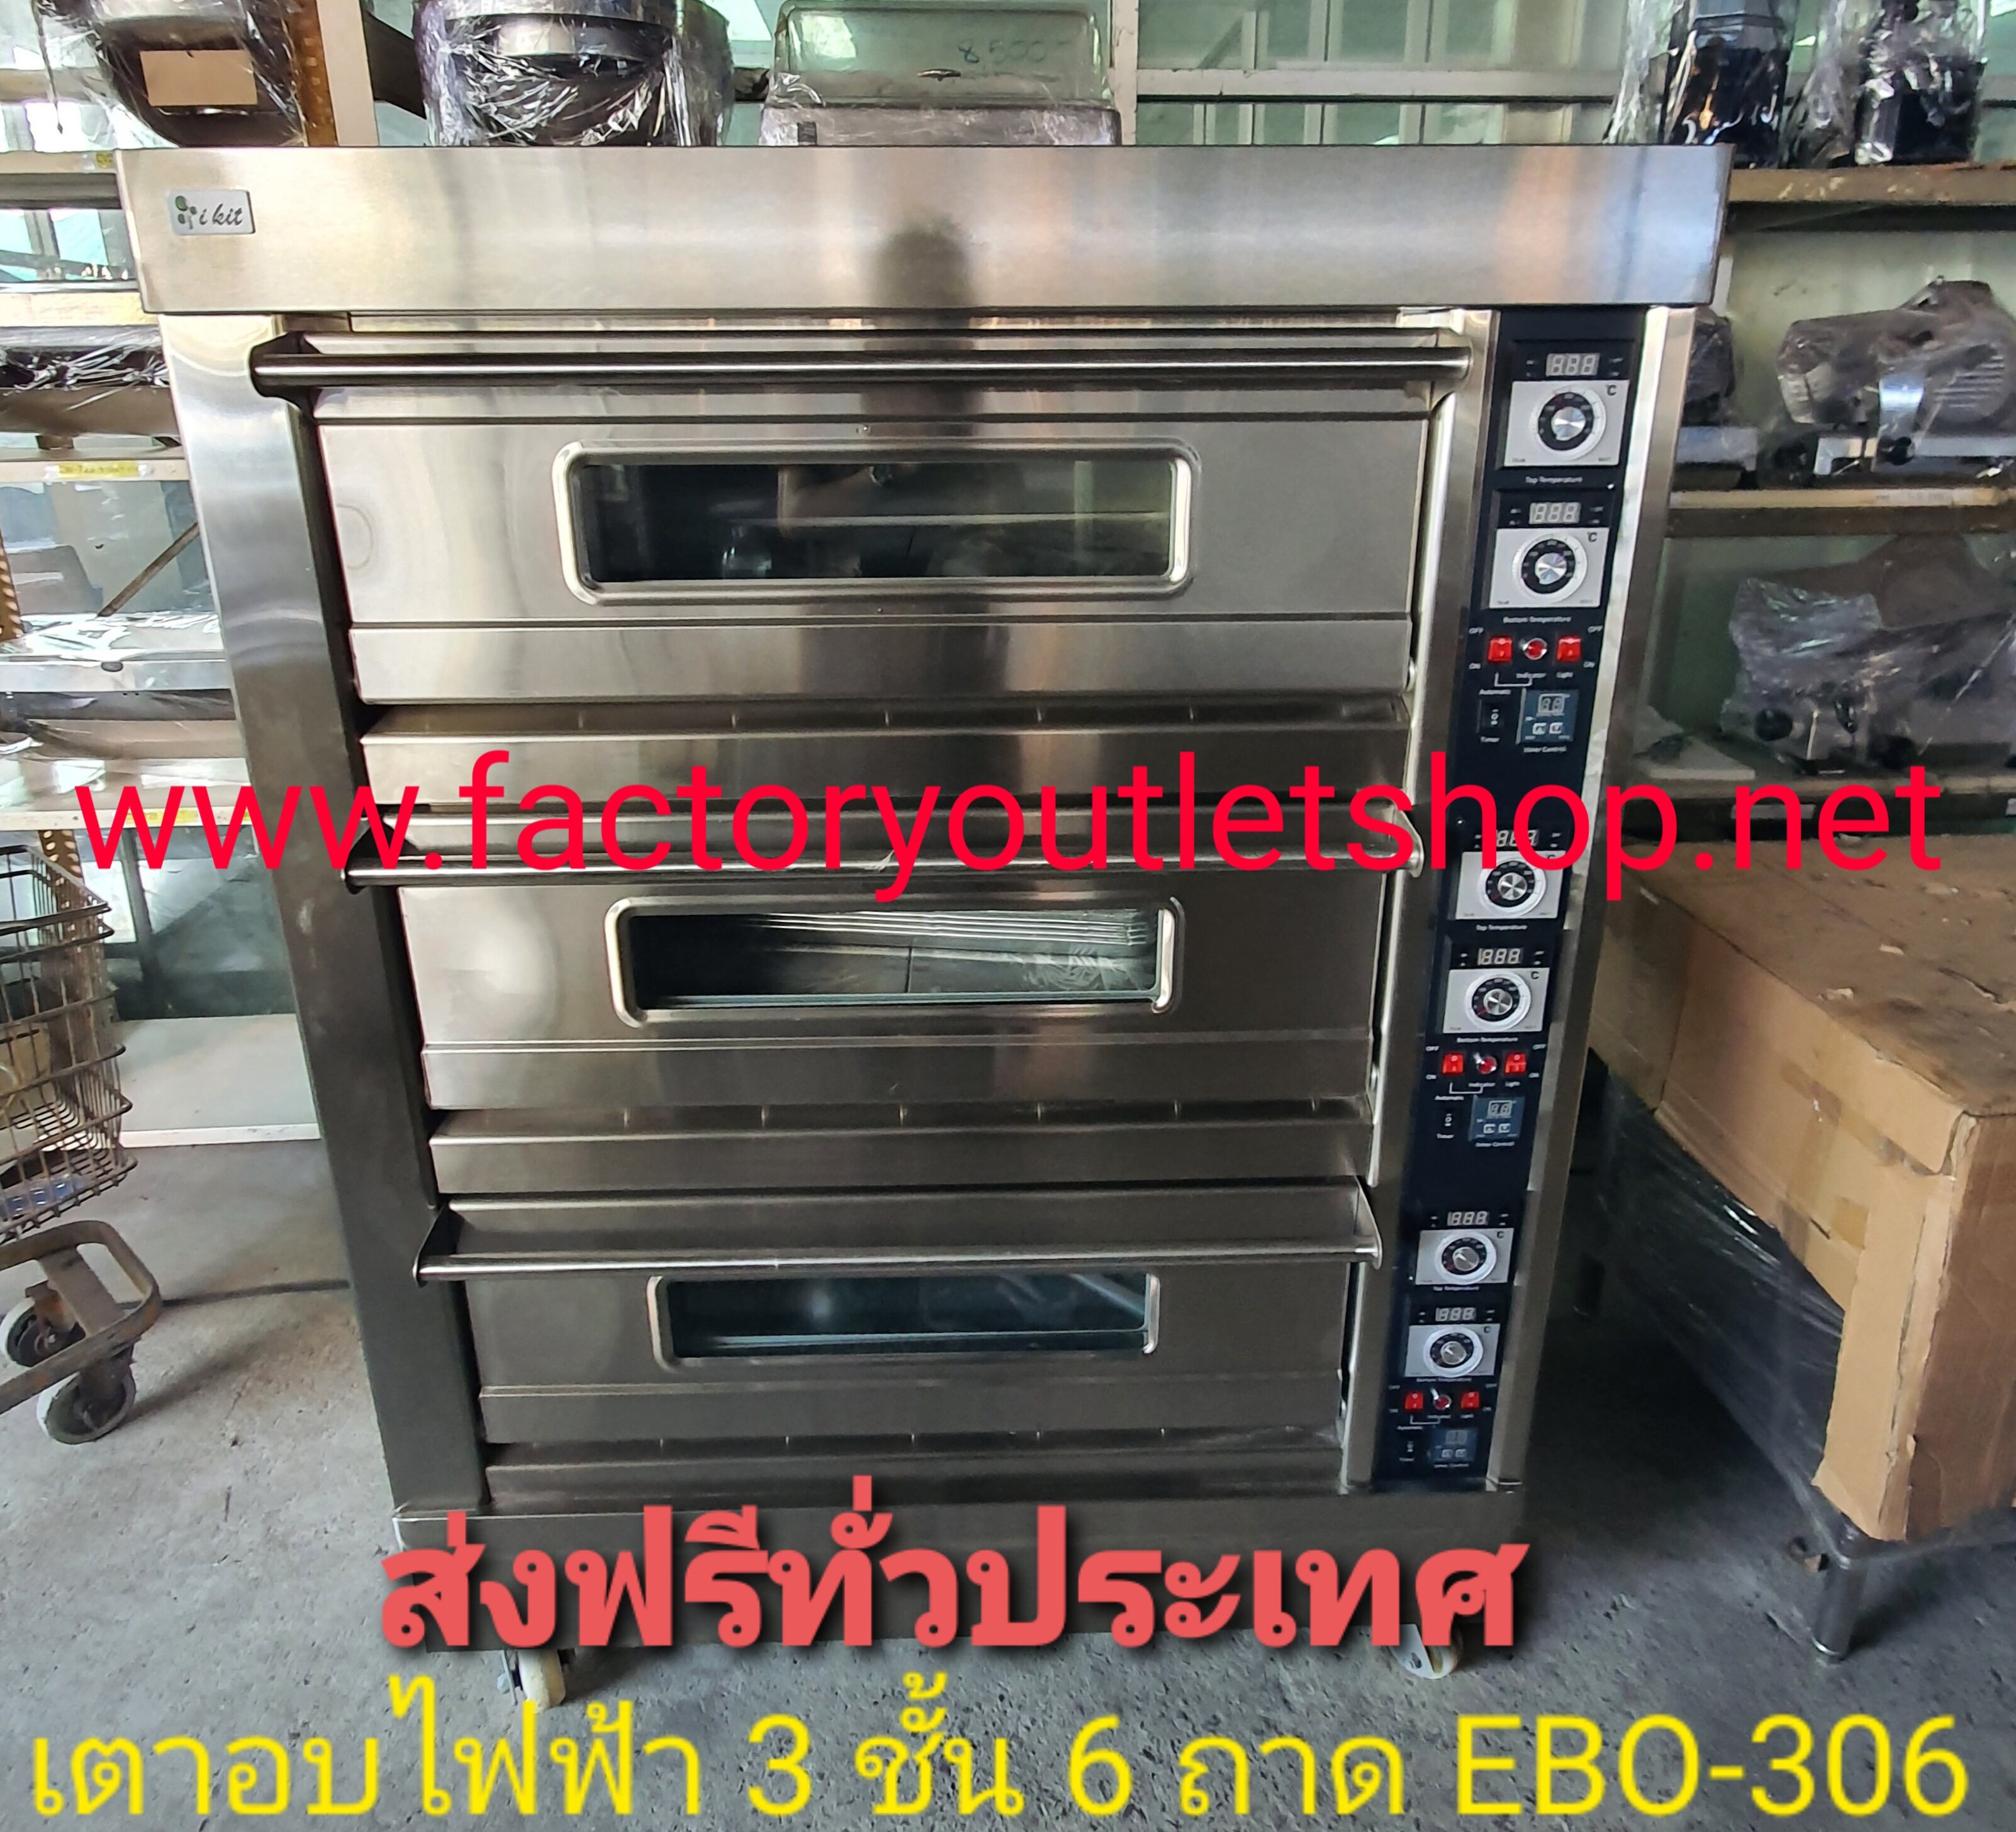 i-kit(ส่งฟรี)(ผ่อน0%)เตาอบไฟฟ้า 3ชั้น 6ถาด 122x85x160ซม. 6,600w*3/380v มีTimer Temp. 0-400 องศา เตาอบขนม เตาอบพิซซ่า เตาอบเบเกอรี่ Electric Baking Oven with timer EBO-306